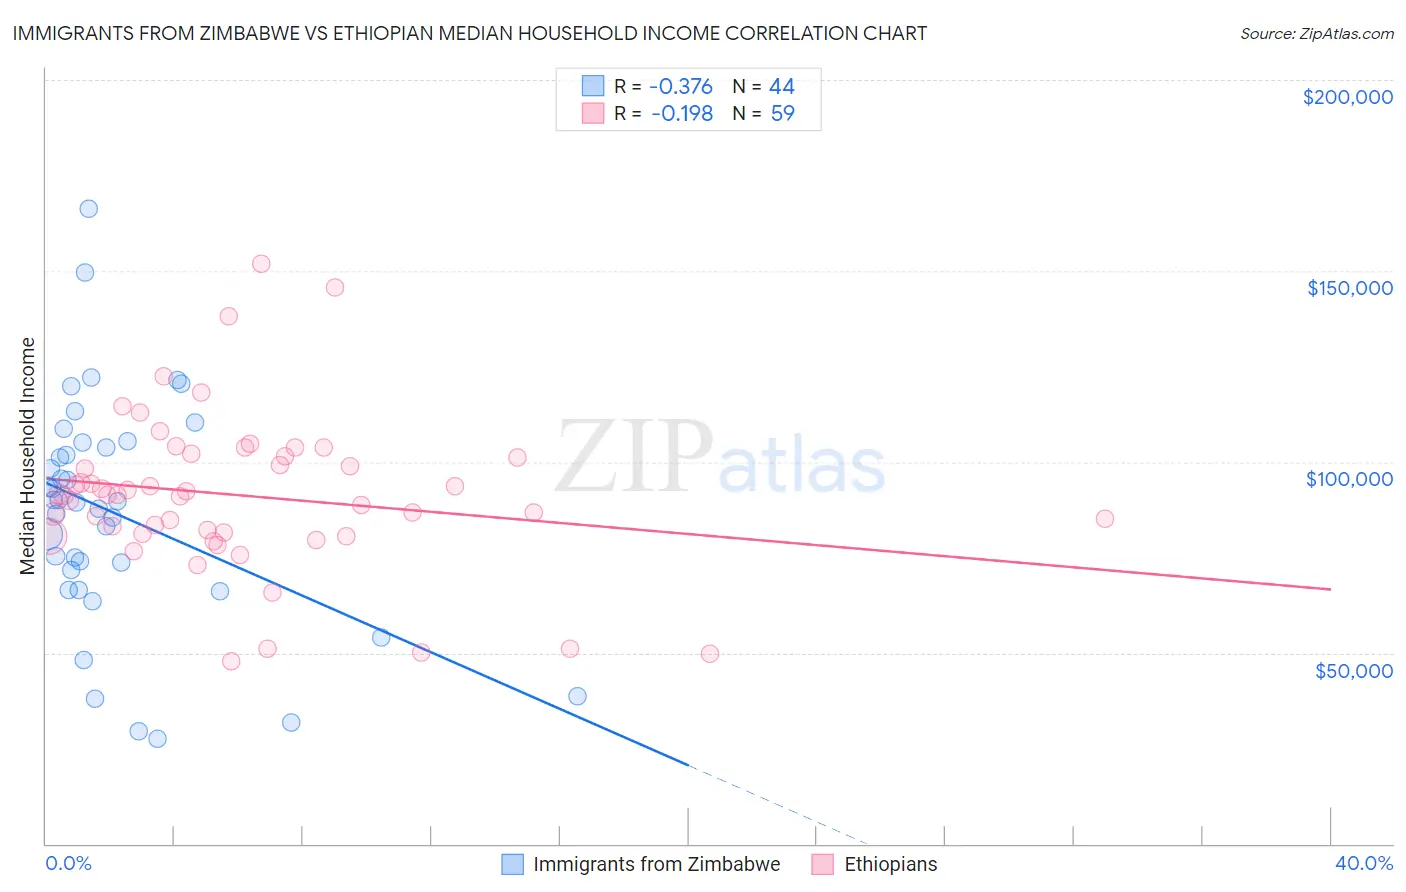 Immigrants from Zimbabwe vs Ethiopian Median Household Income